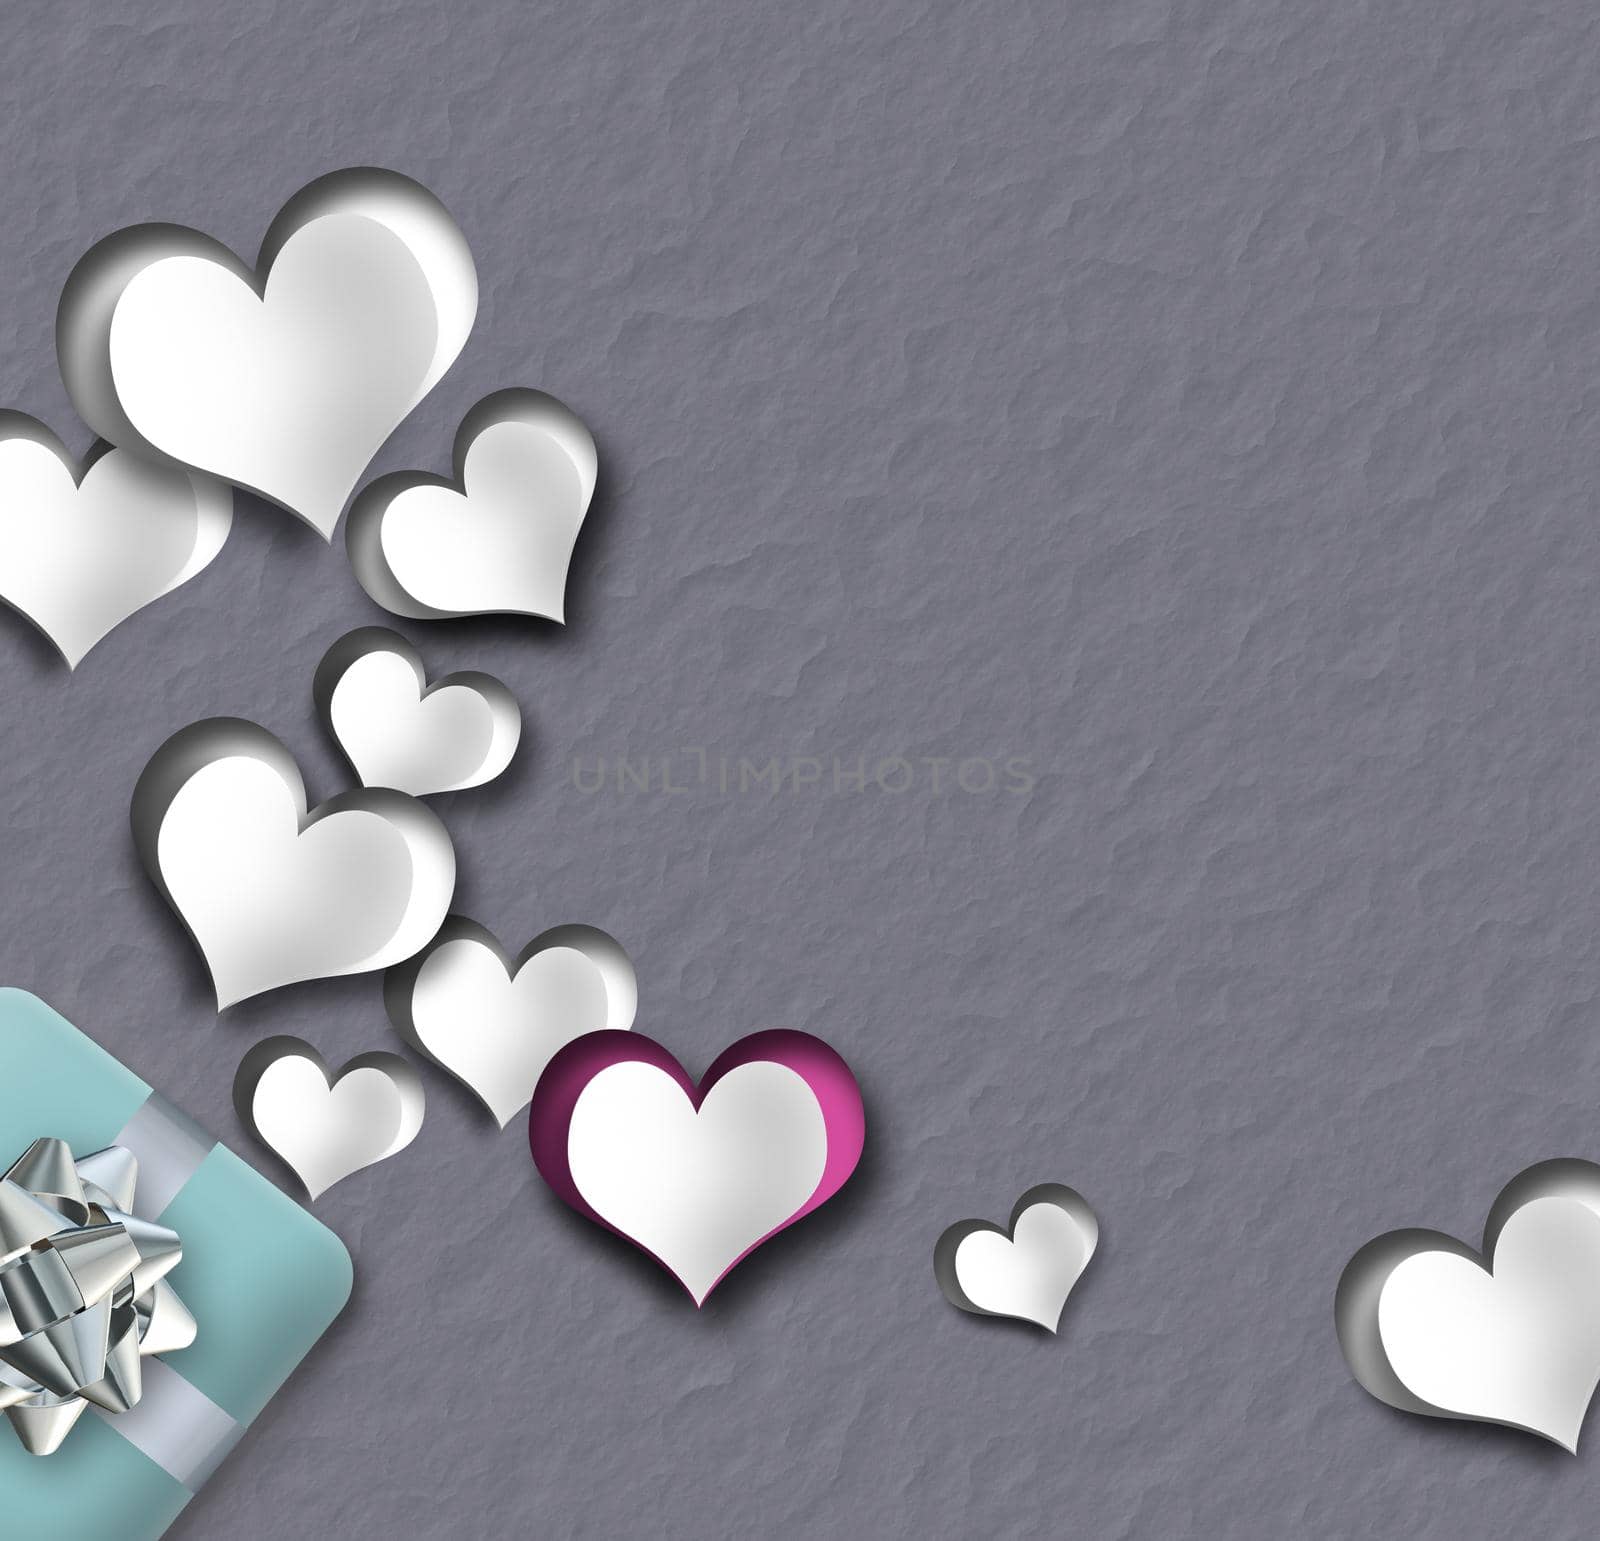 Elegant modern unusual love card, paper hearts, gift box on grey pastel background. 3D illustration. Romantic template for wedding, invitation, Valentine's card